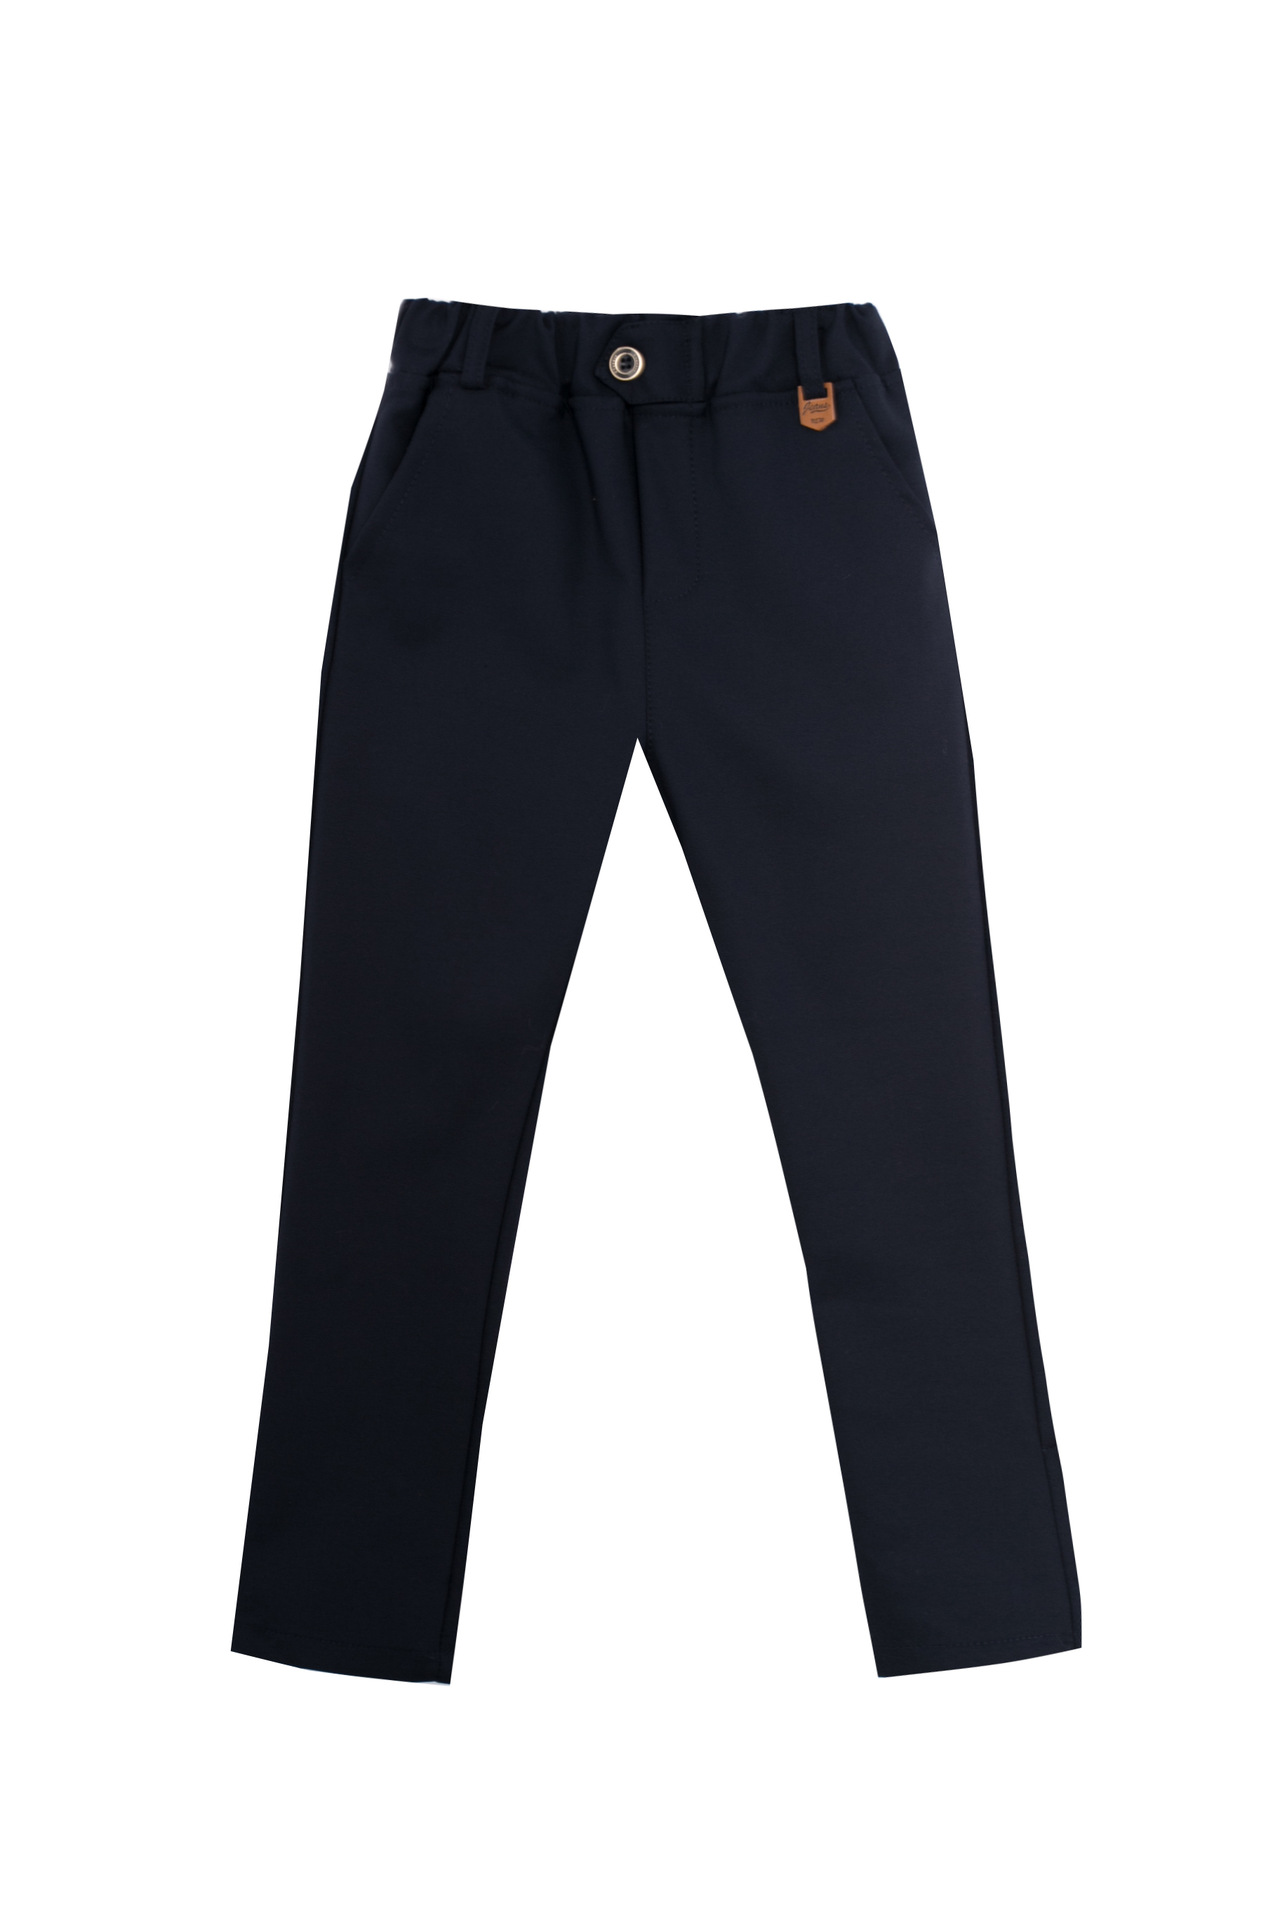 School Uniform Essentials | Boy's Elastic School Trouser GREY | Uniformity  Ireland